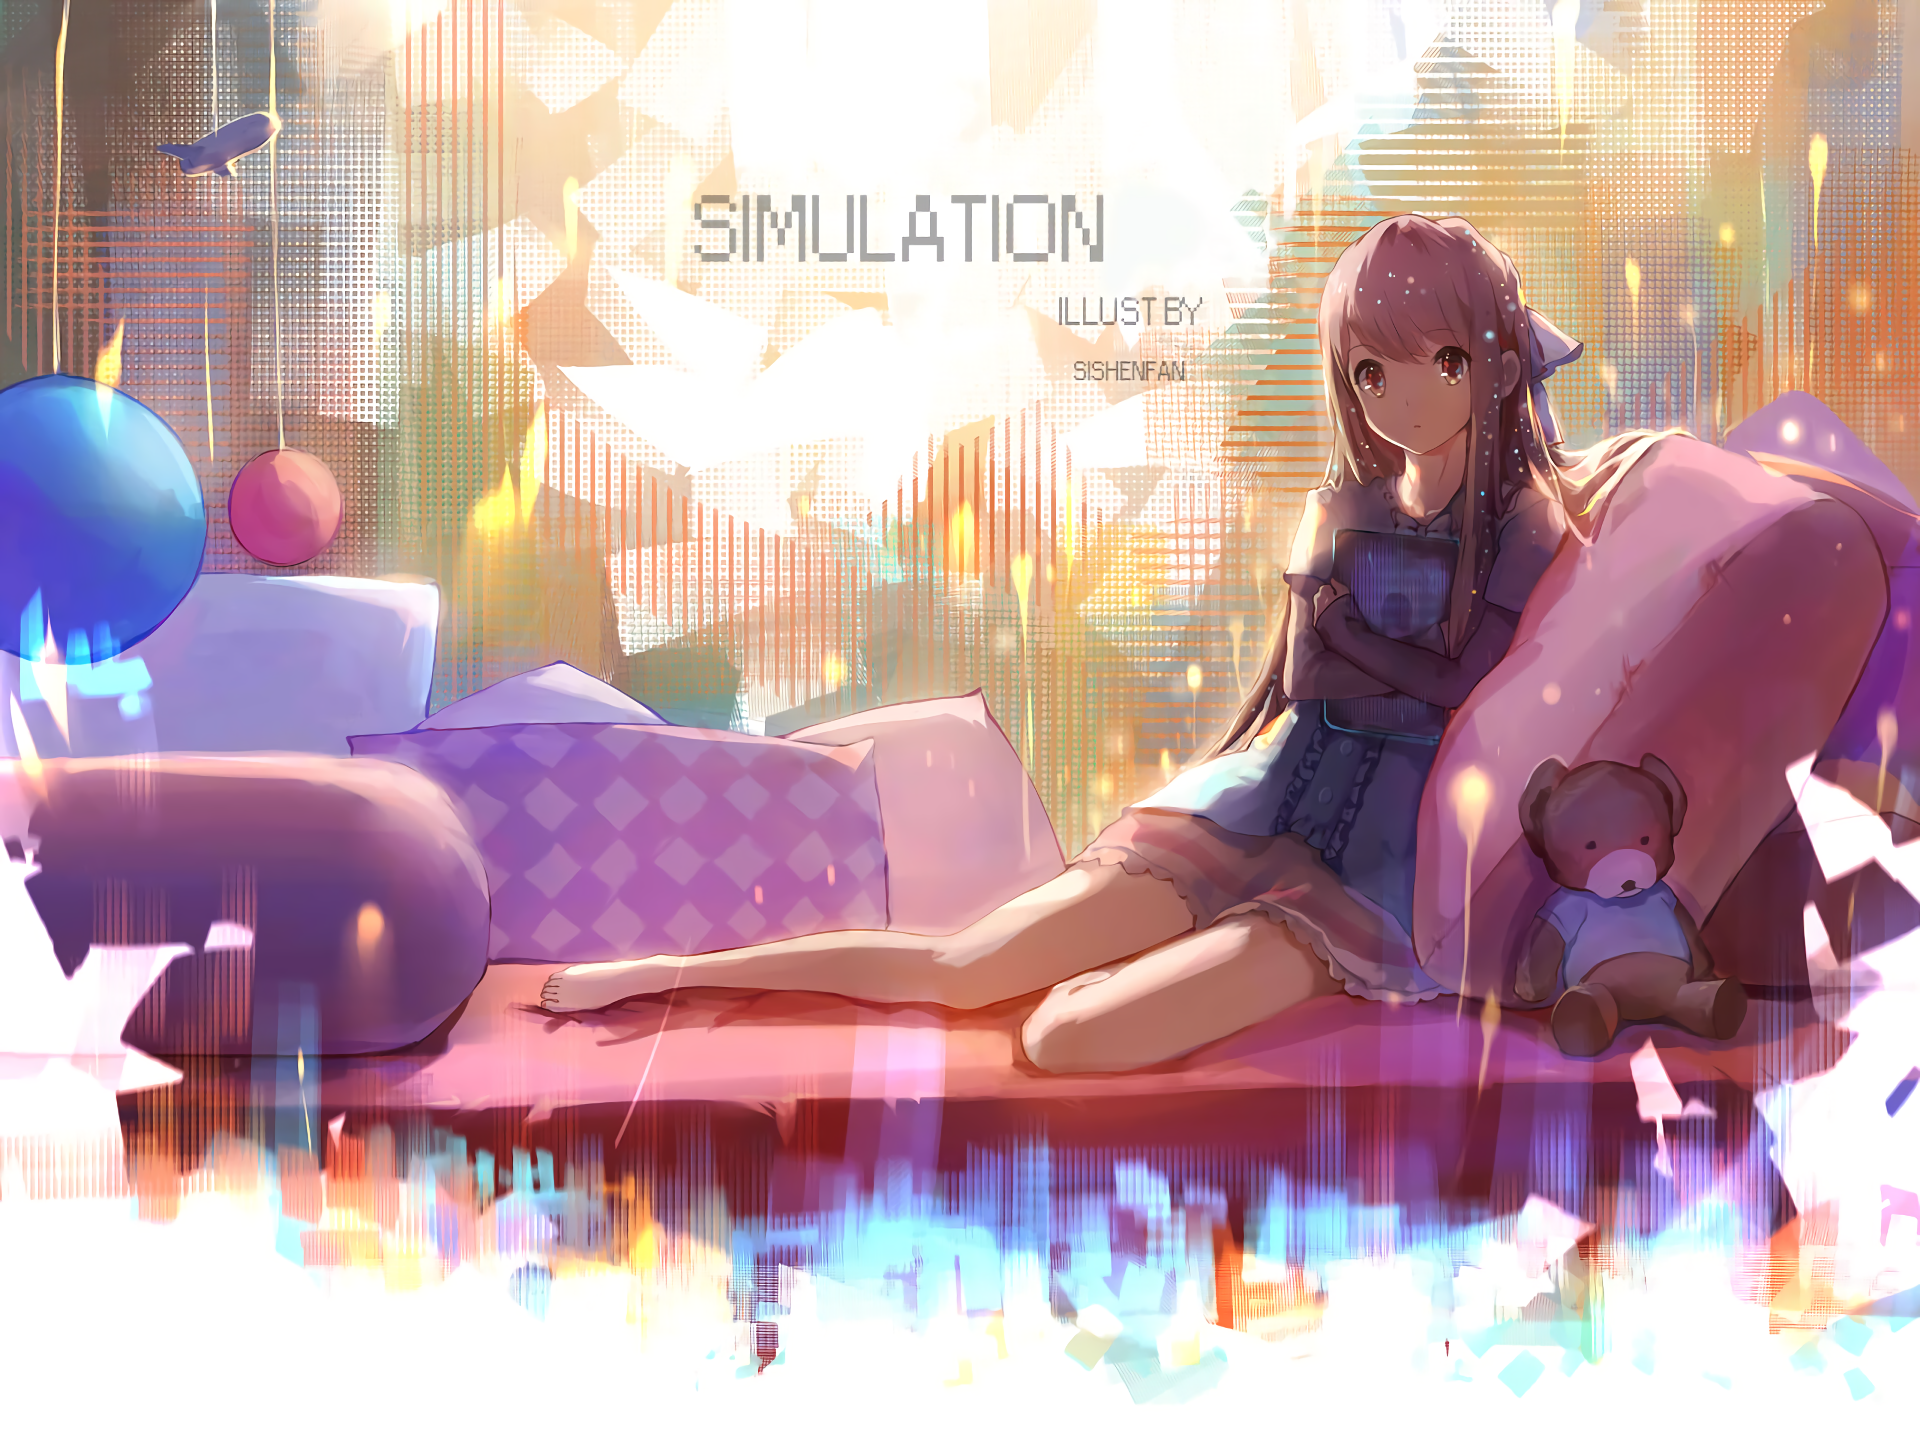 Anime Shelter HD Wallpaper | Background Image